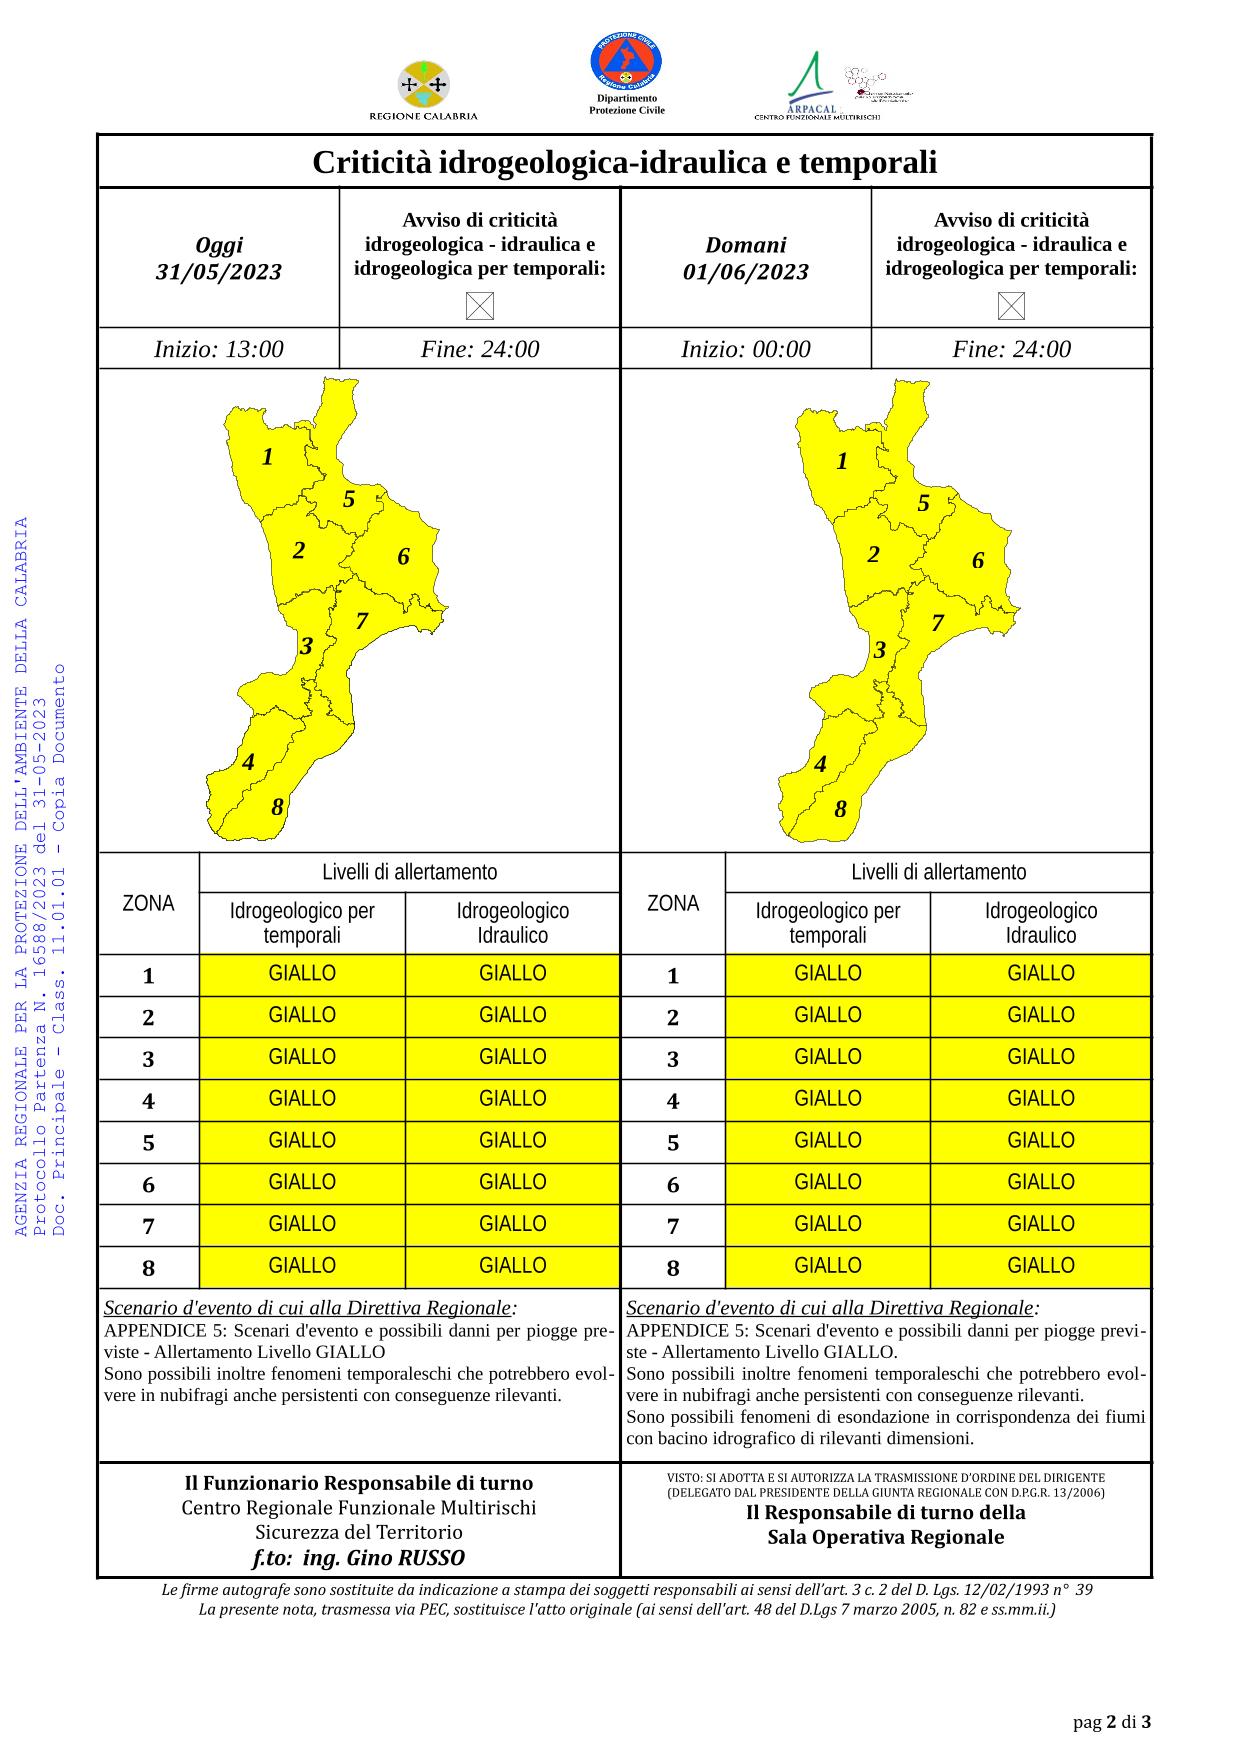 Criticità idrogeologica-idraulica e temporali in Calabria 31-05-2023